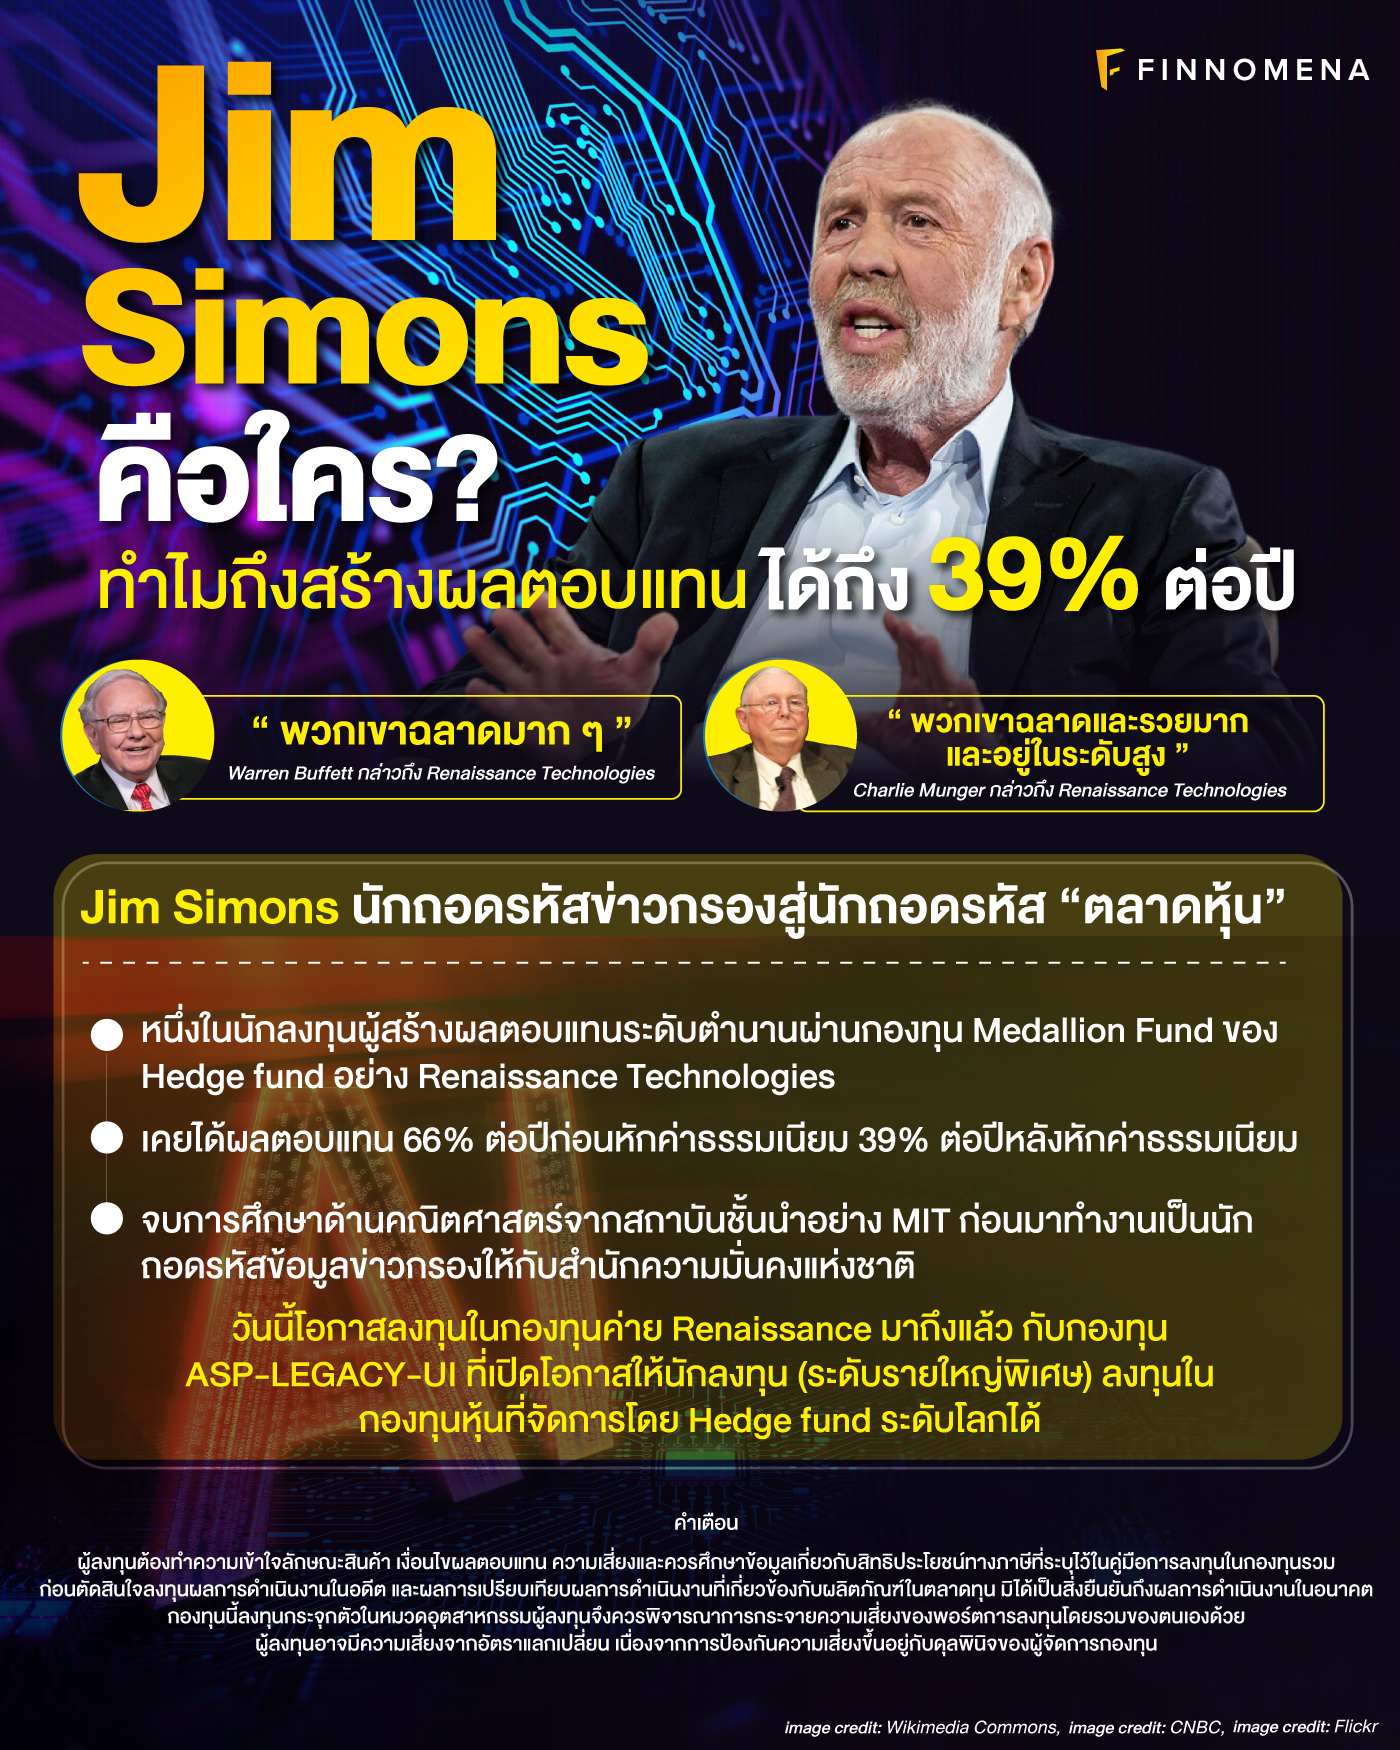 Jim Simons คือใคร? ทำไมถึงสร้างผลตอบแทนได้ถึง 39% ต่อปี